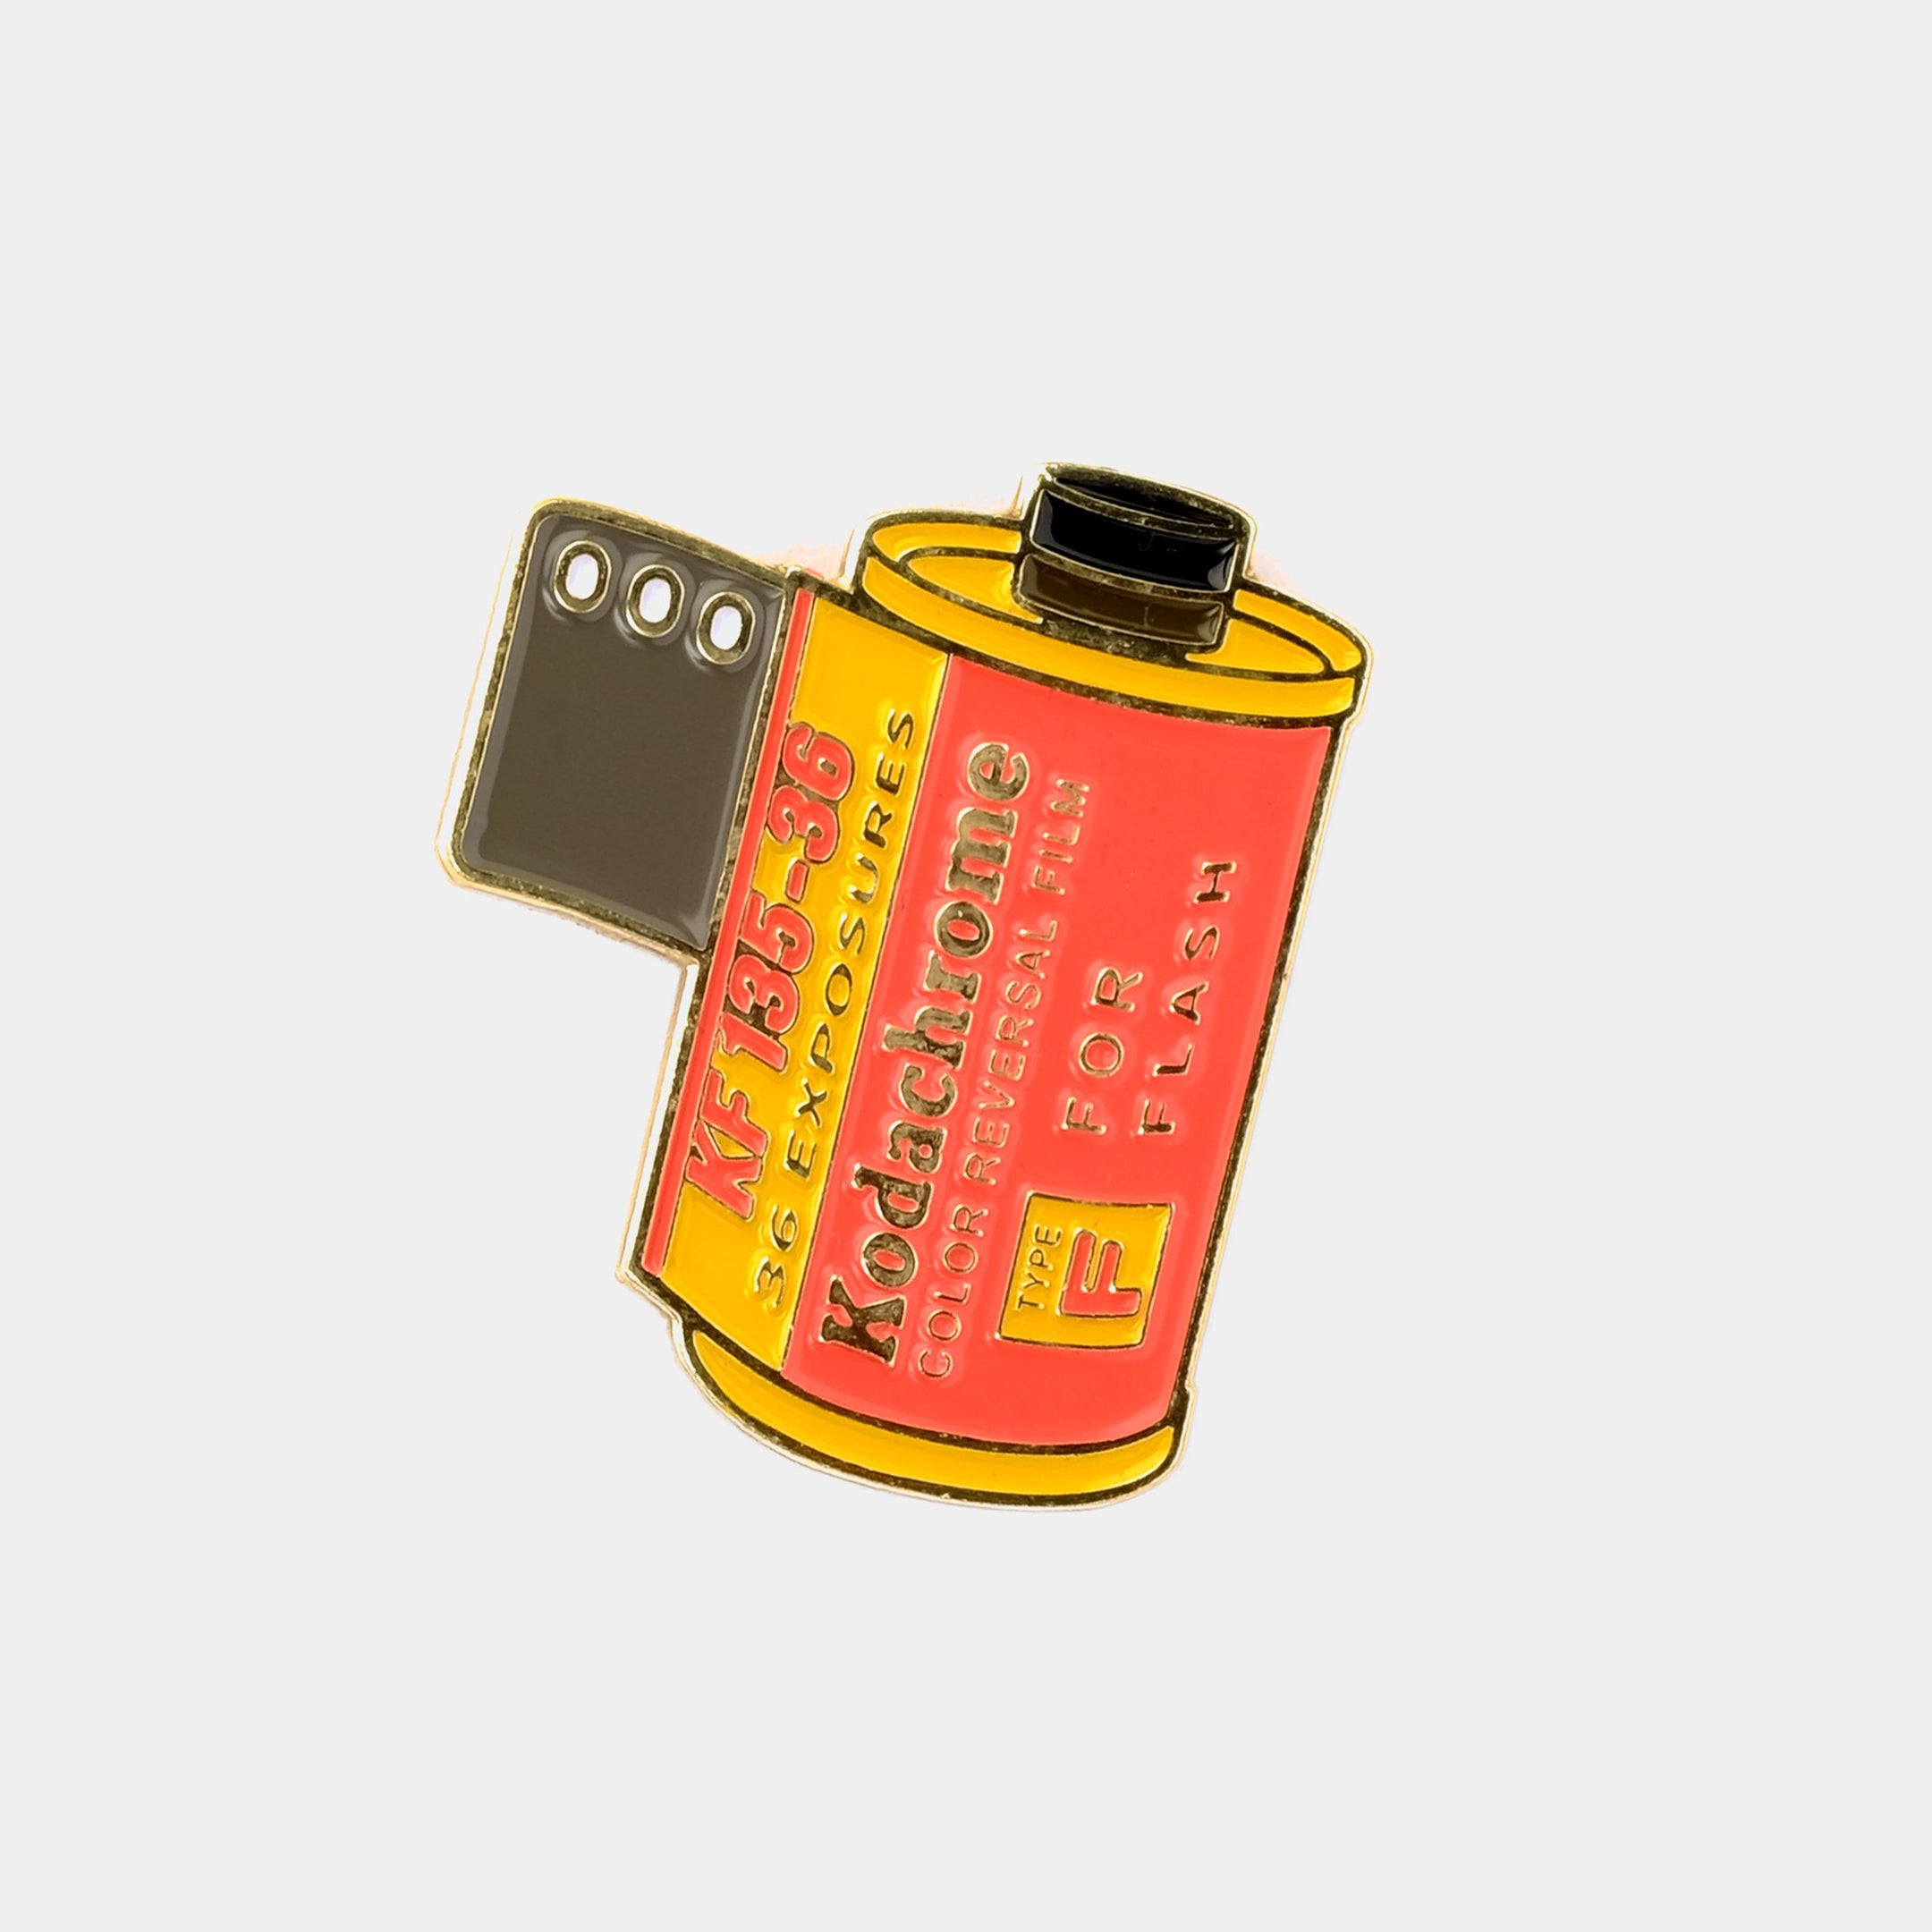 Kodachrome Film Canister Enamel Pin